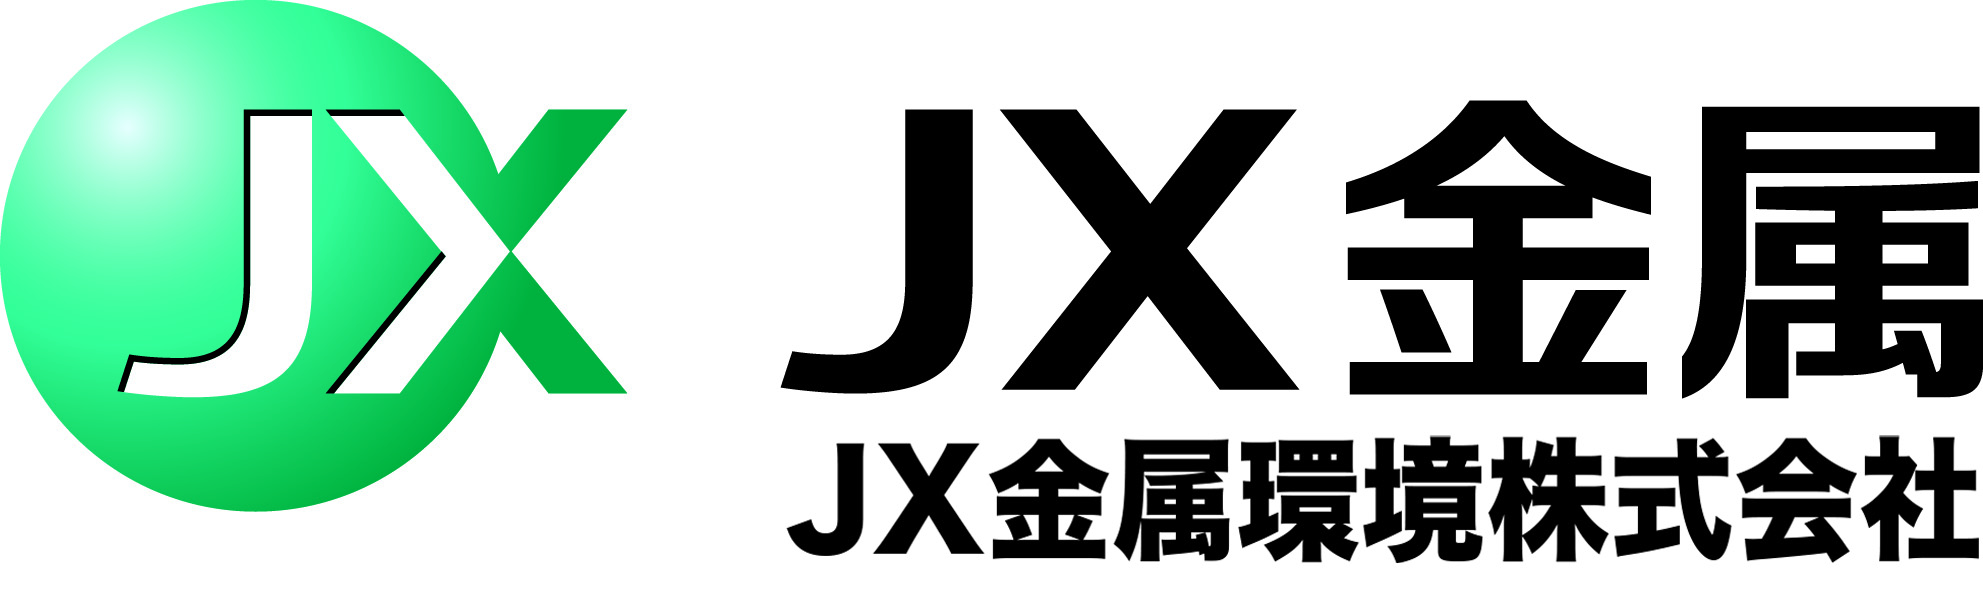 JX金属環境株式会社